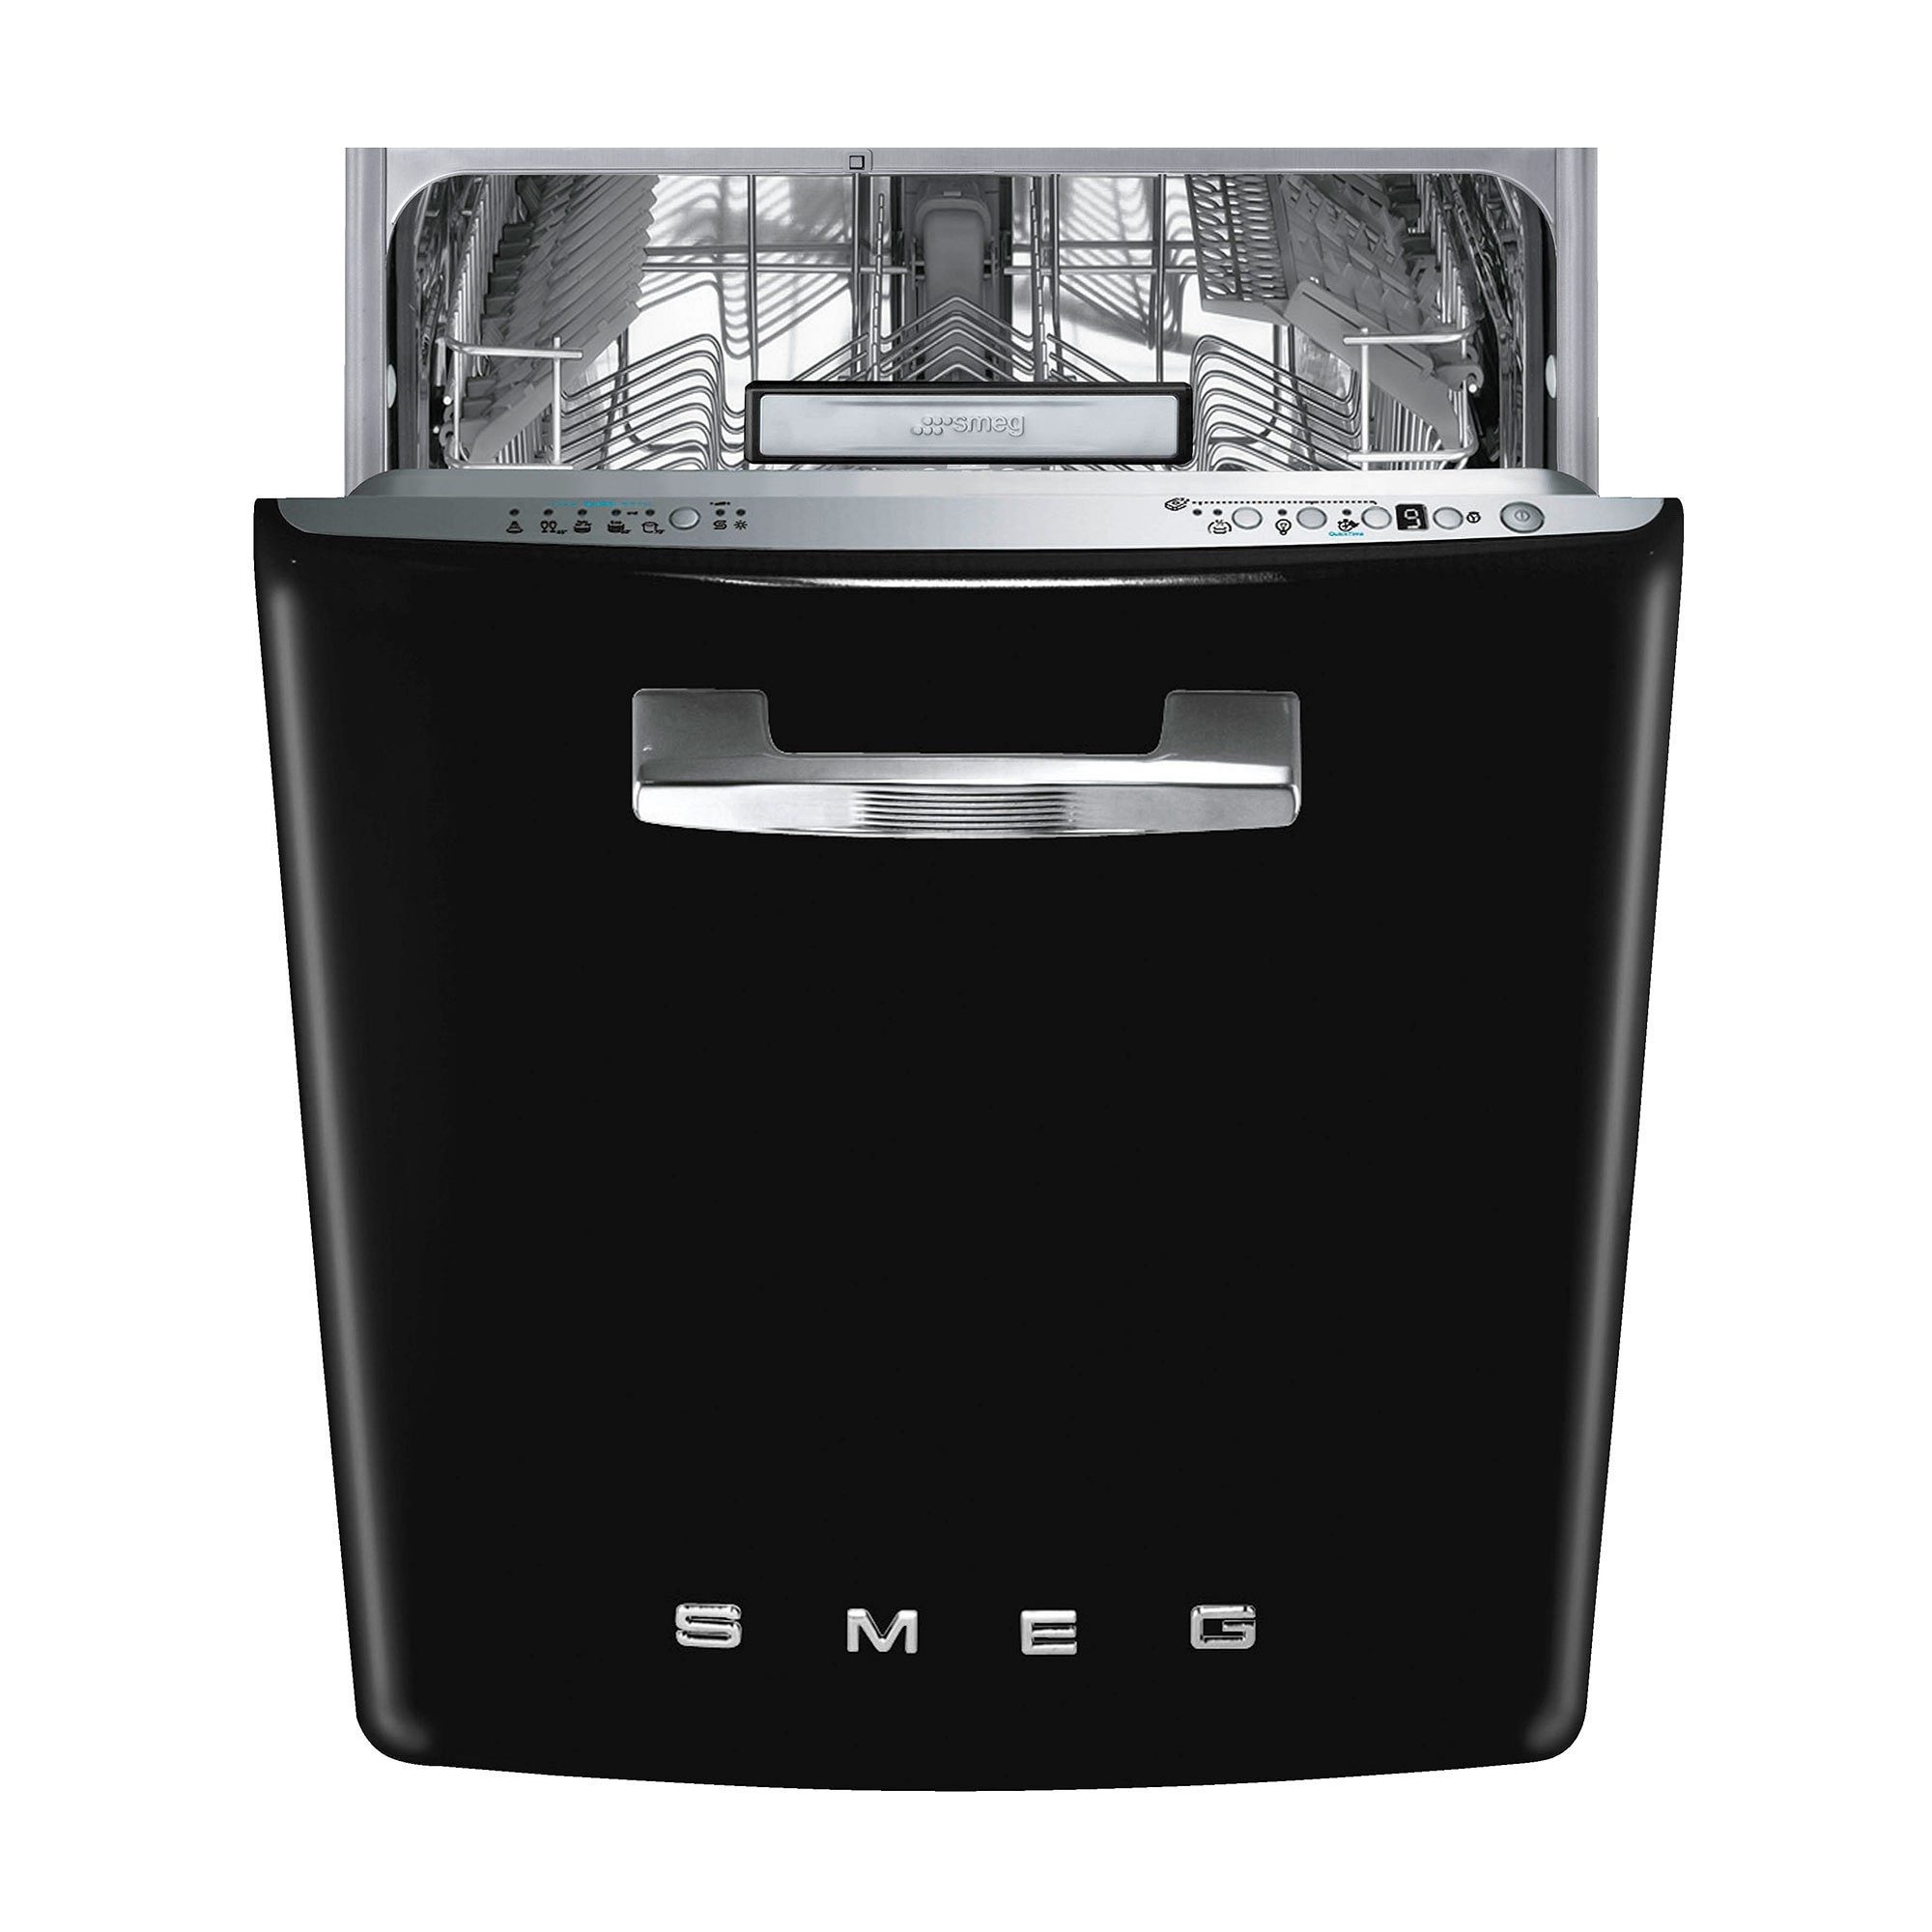 SMEG 24" Retro Dishwasher in Black